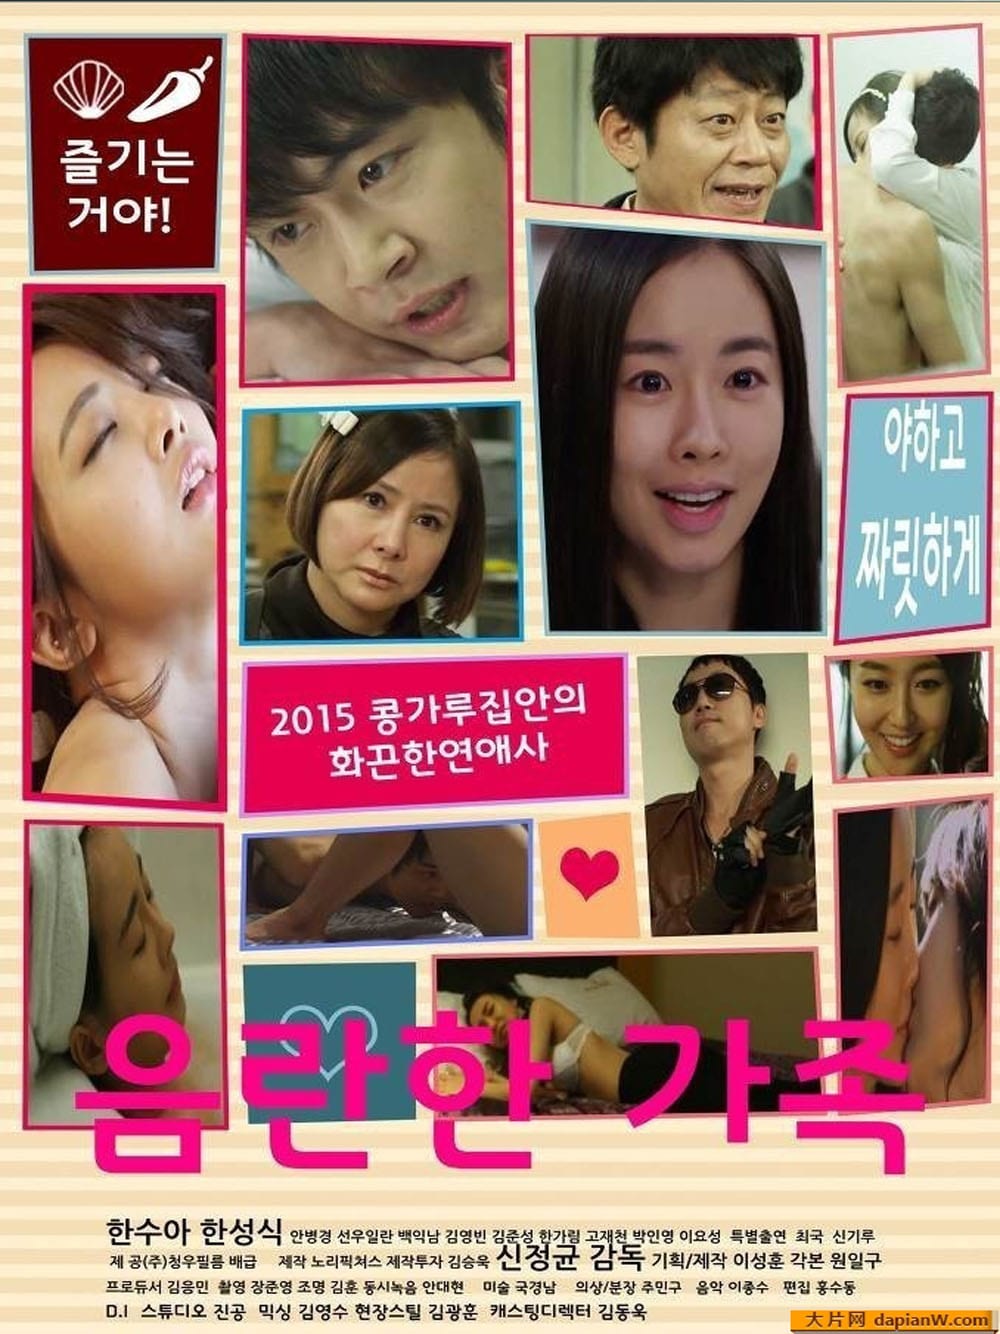 Naughty Family Full Korea 18+ Adult Movie Online Free